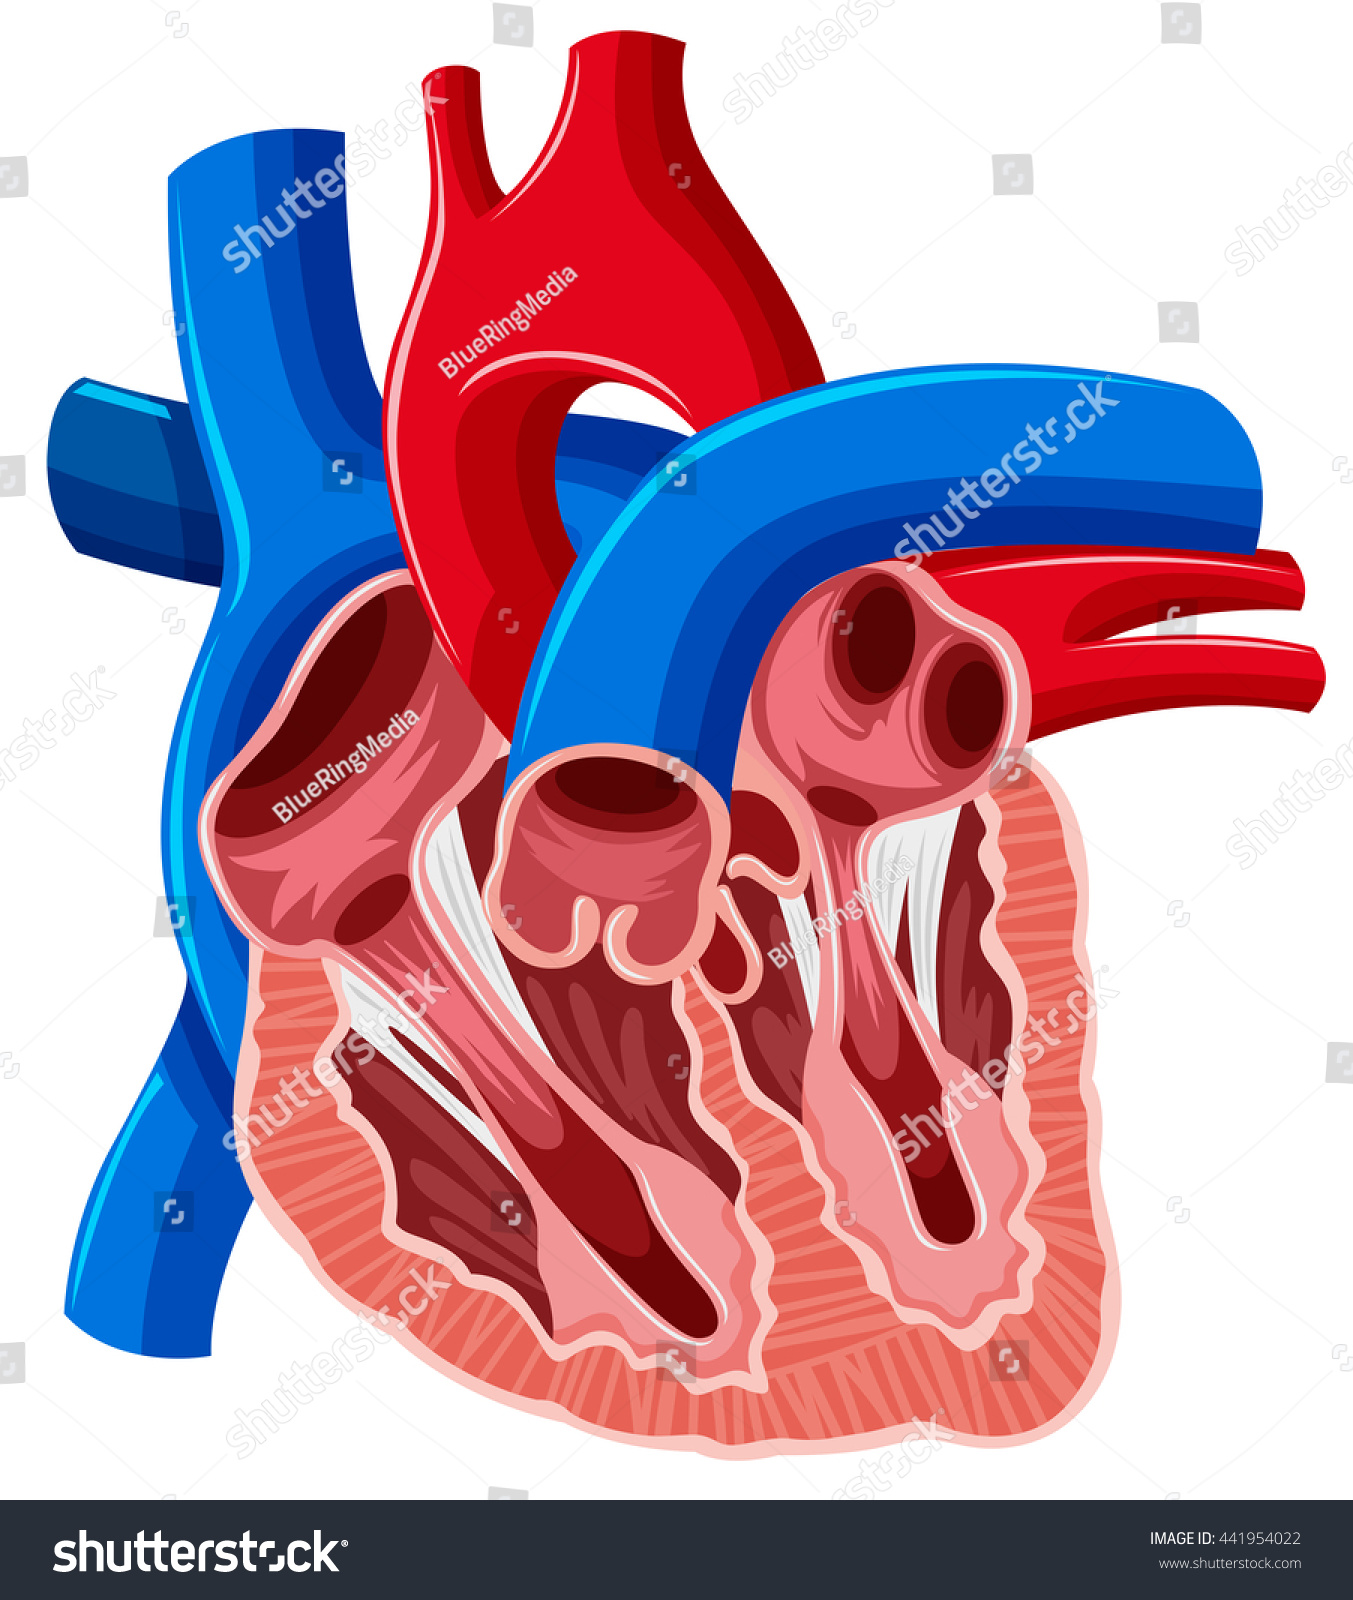 Inside Diagram Of Human Heart Illustration - 441954022 ...